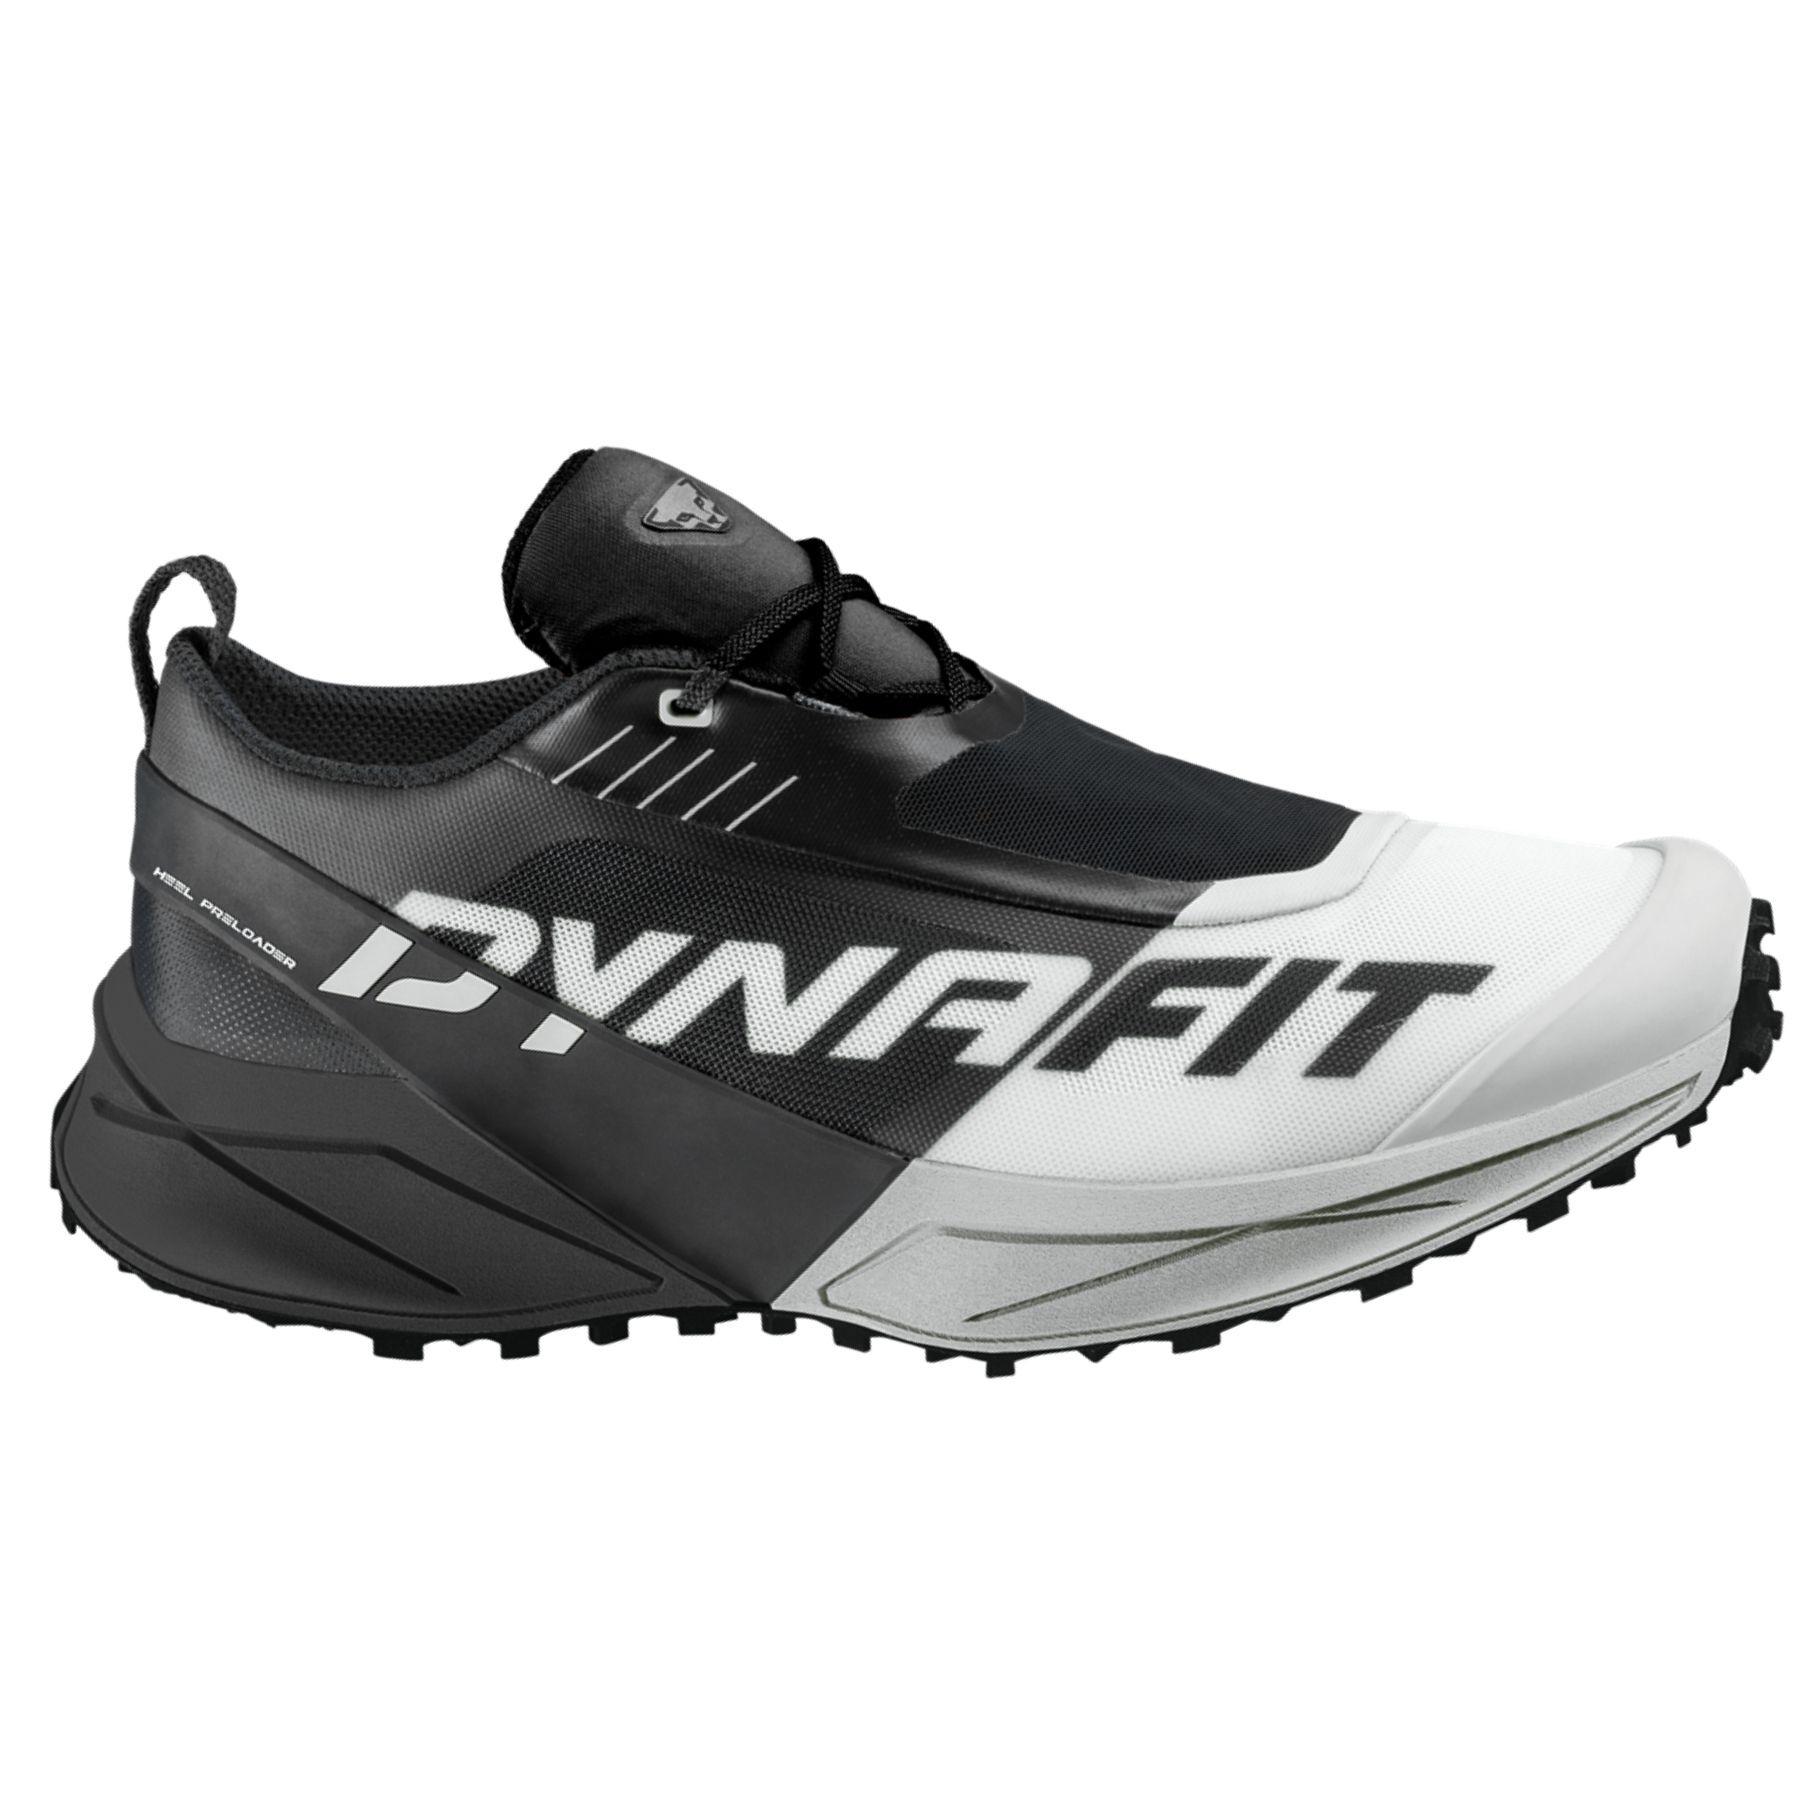 Dynafit Ultra 100 - Trail Running shoes - Men's